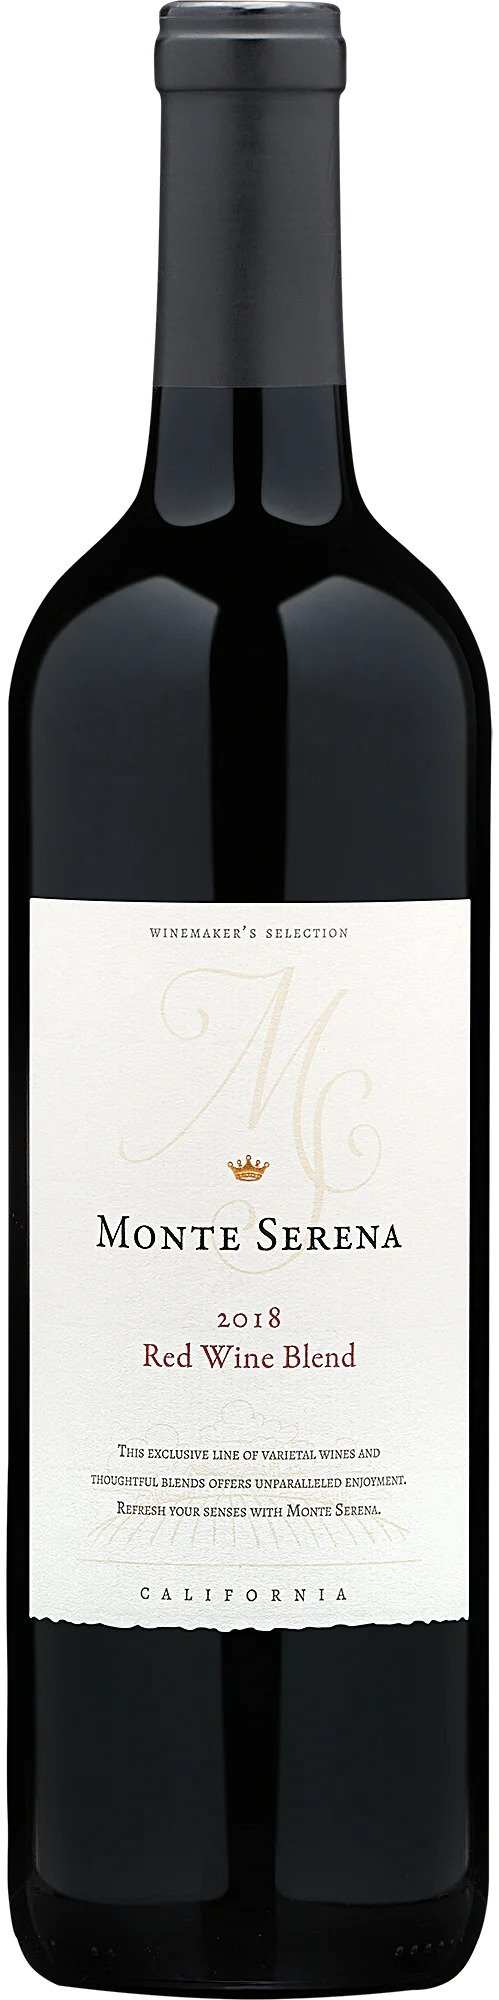 2018 Monte Serena Winemaker's Selection Red Blend